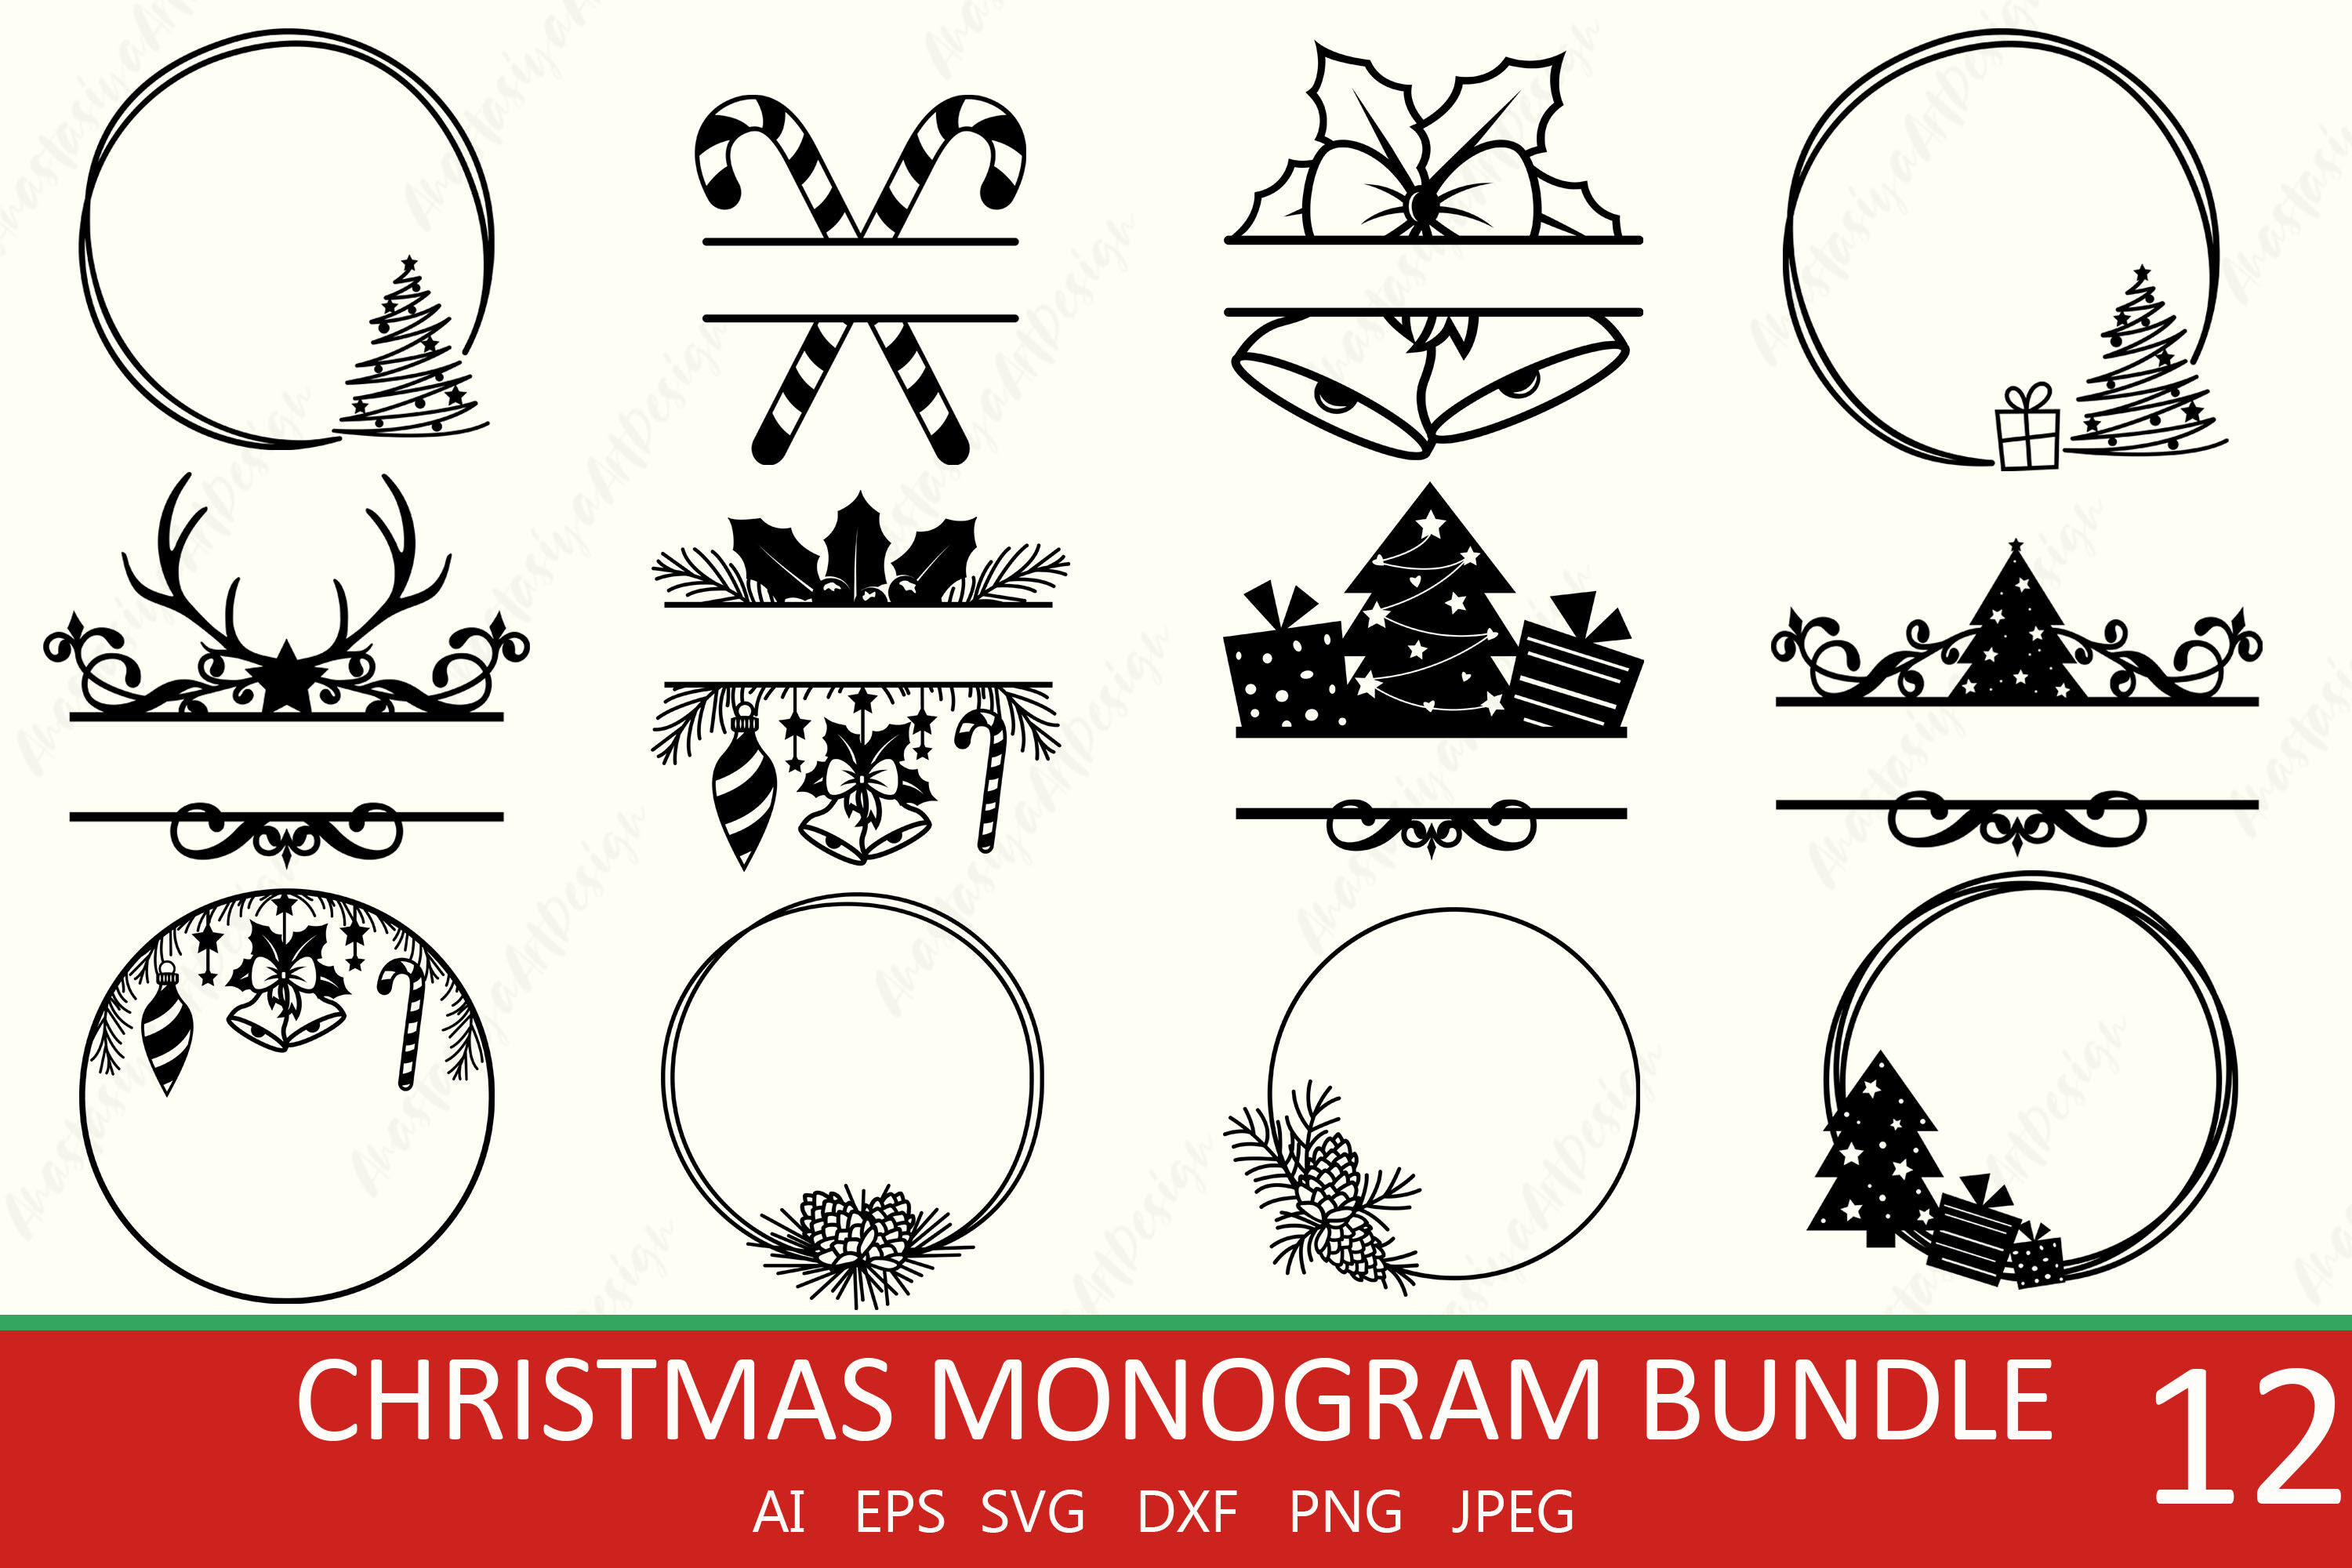 Free Merry Christmas Monogram Frame SVG Cut File